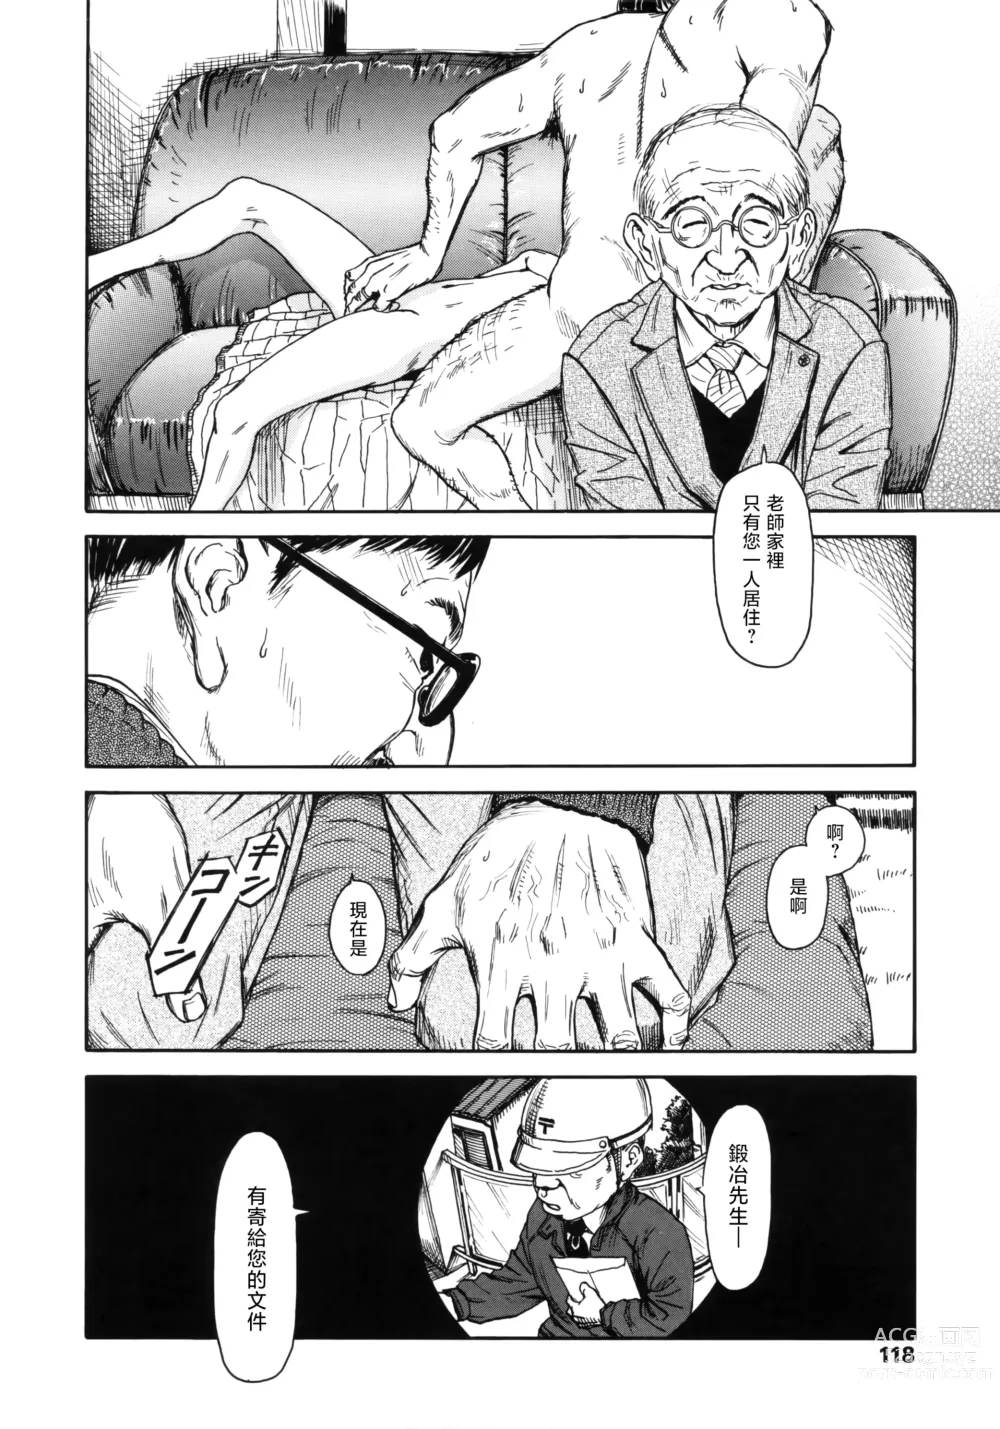 Page 18 of manga Mezame